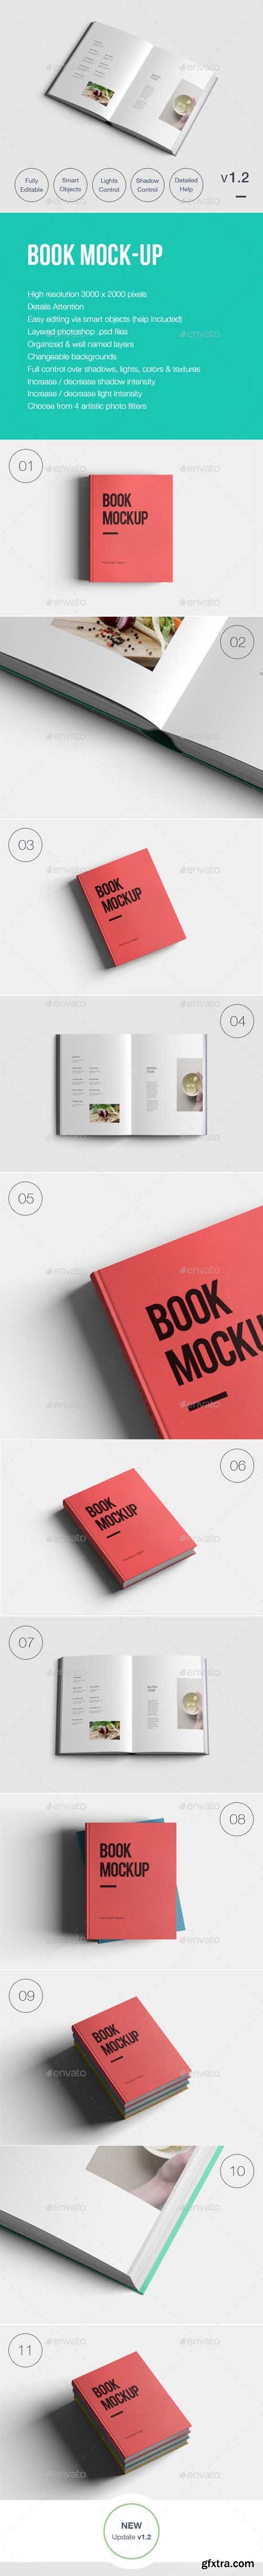 GR - Book Mockup 15562300